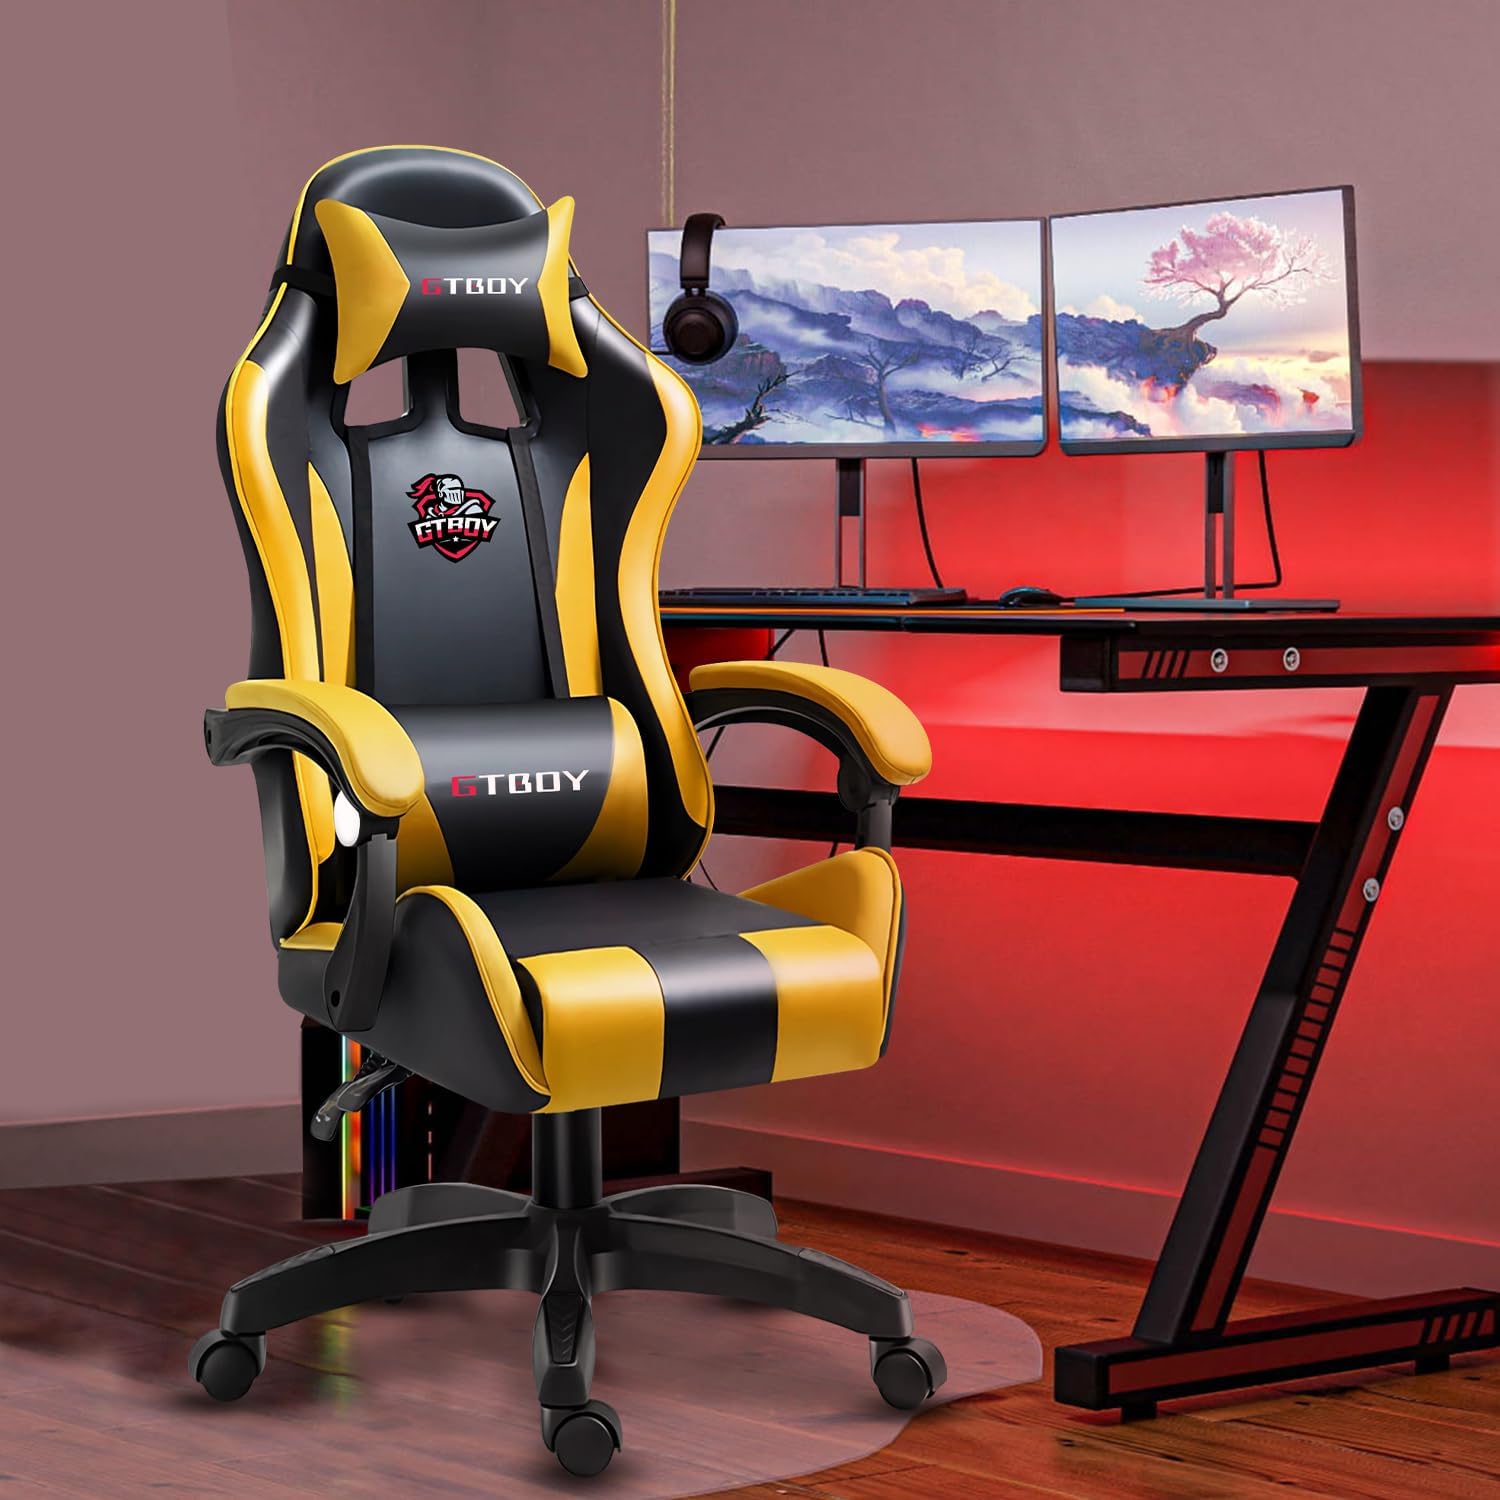 GTBoy ゲーミングチェア gaming chair PCゲーミングチェア ゲーム用チェア デスク pcチェア 椅子 テレワーク 140°リクライニング ゲームチェア ハイバック イス テレワーク【安心の非再生ウレタン採用】 (黒とイエロー, オットマンなし) 2